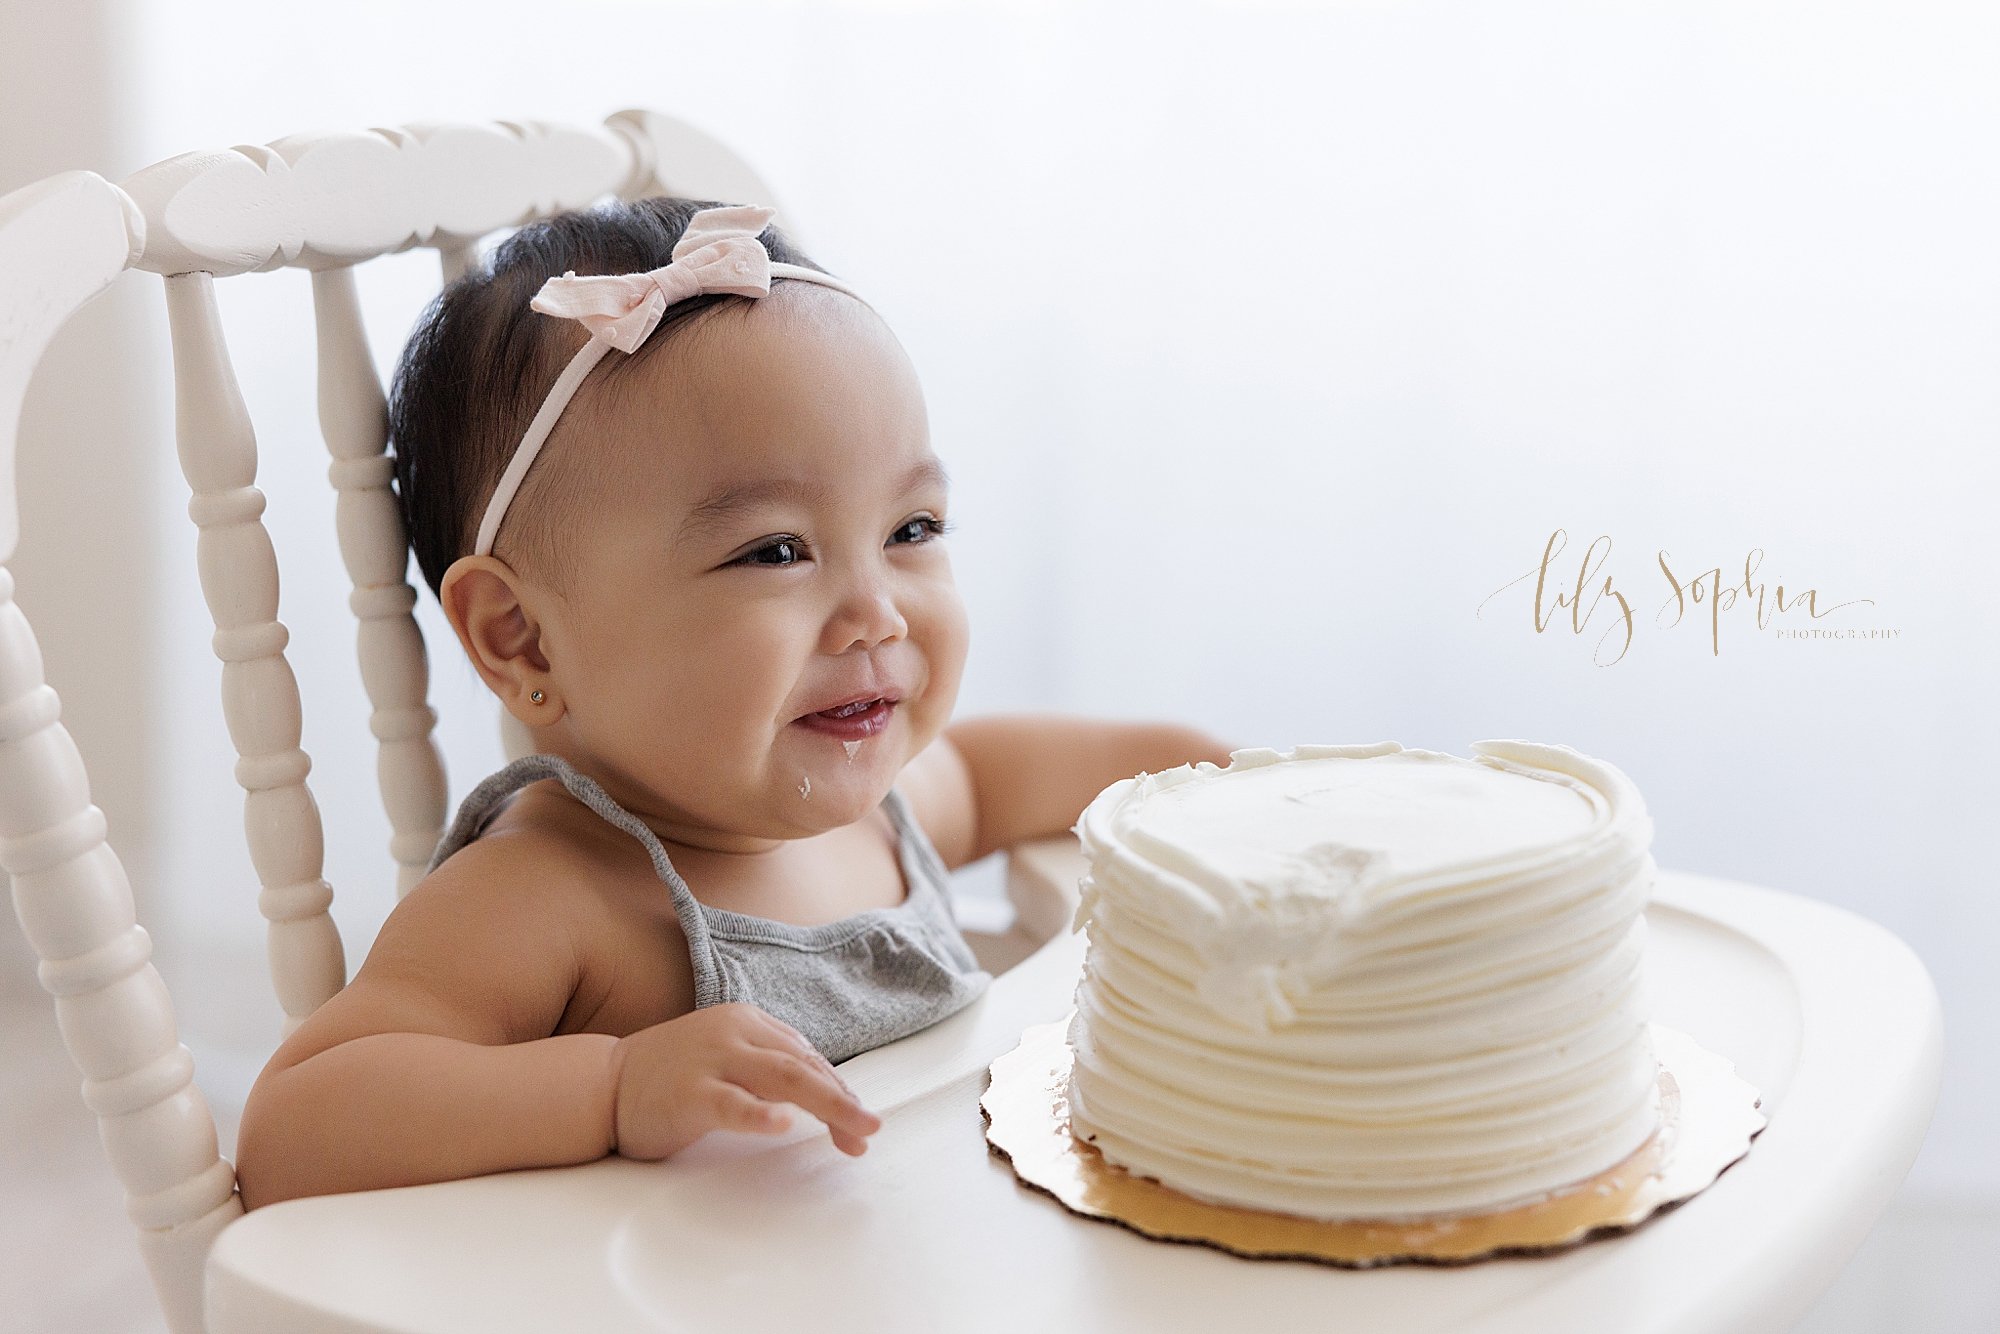 intown-atlanta-decatur-brookhaven-buckhead-first-birthday-cake-smash-photoshoot-baby-girl-family-studio-photos_5319.jpg